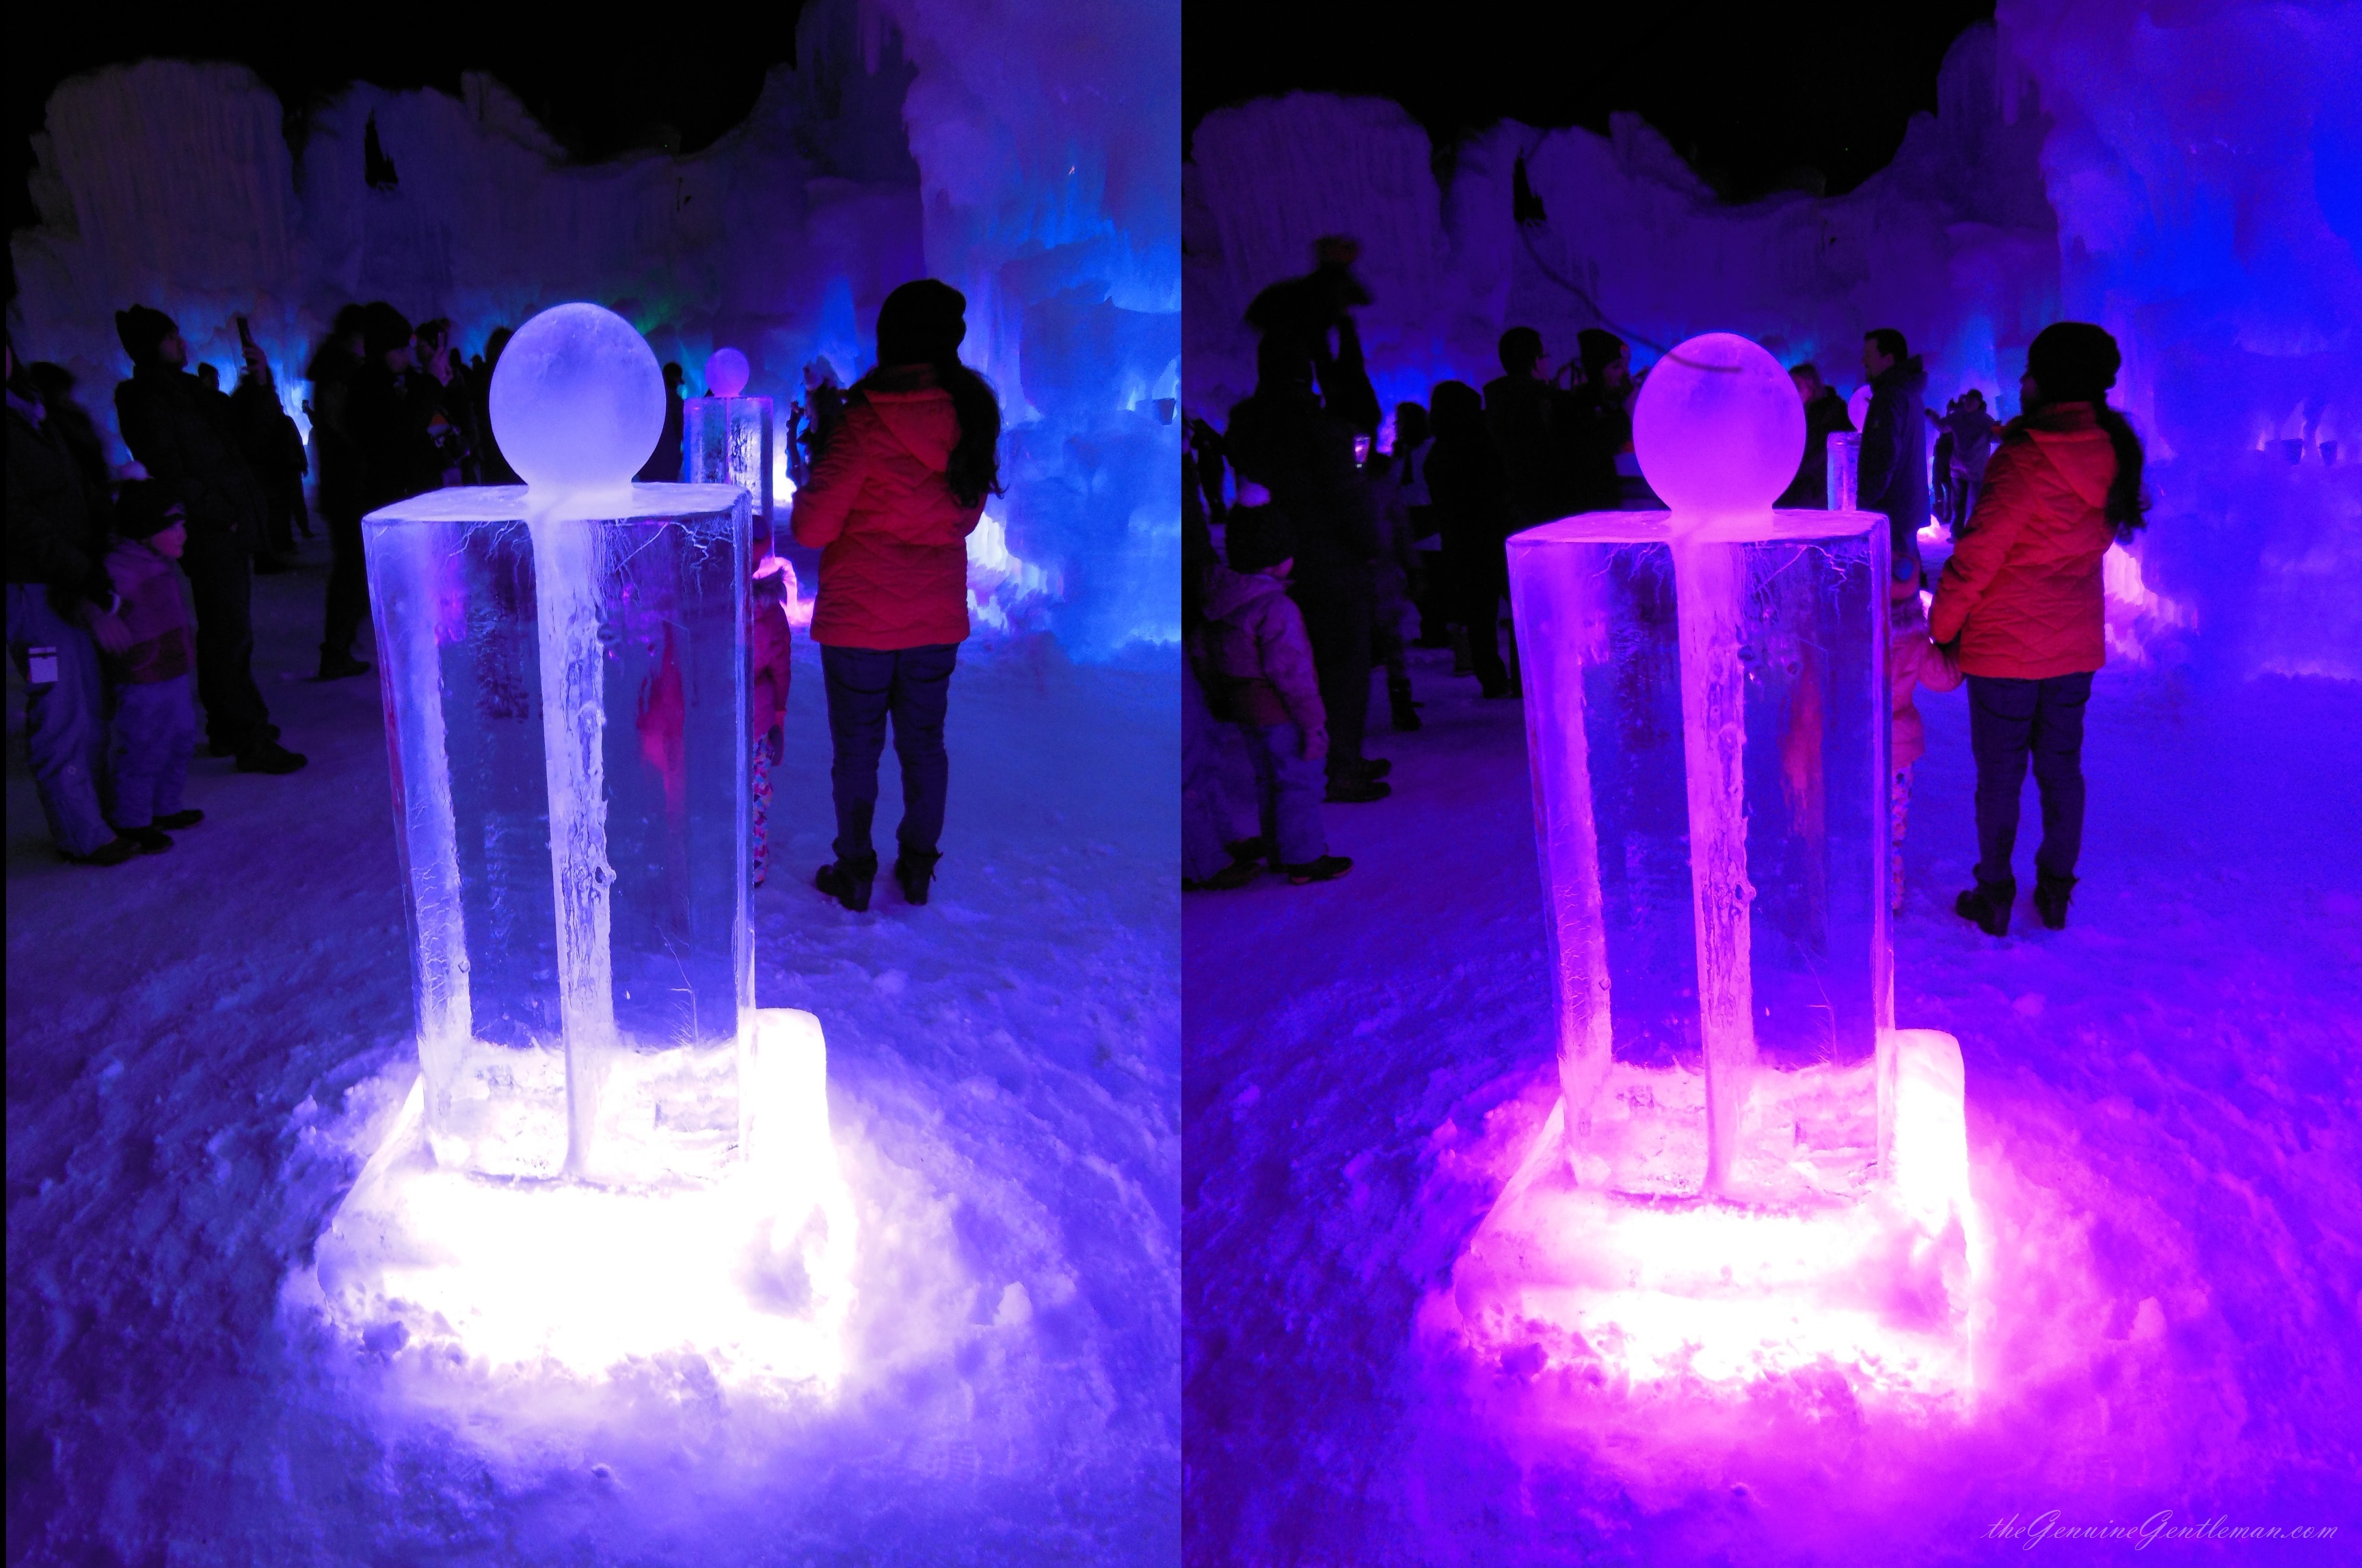 Ice Castle - Ice sculpture, Lincoln New Hampshire